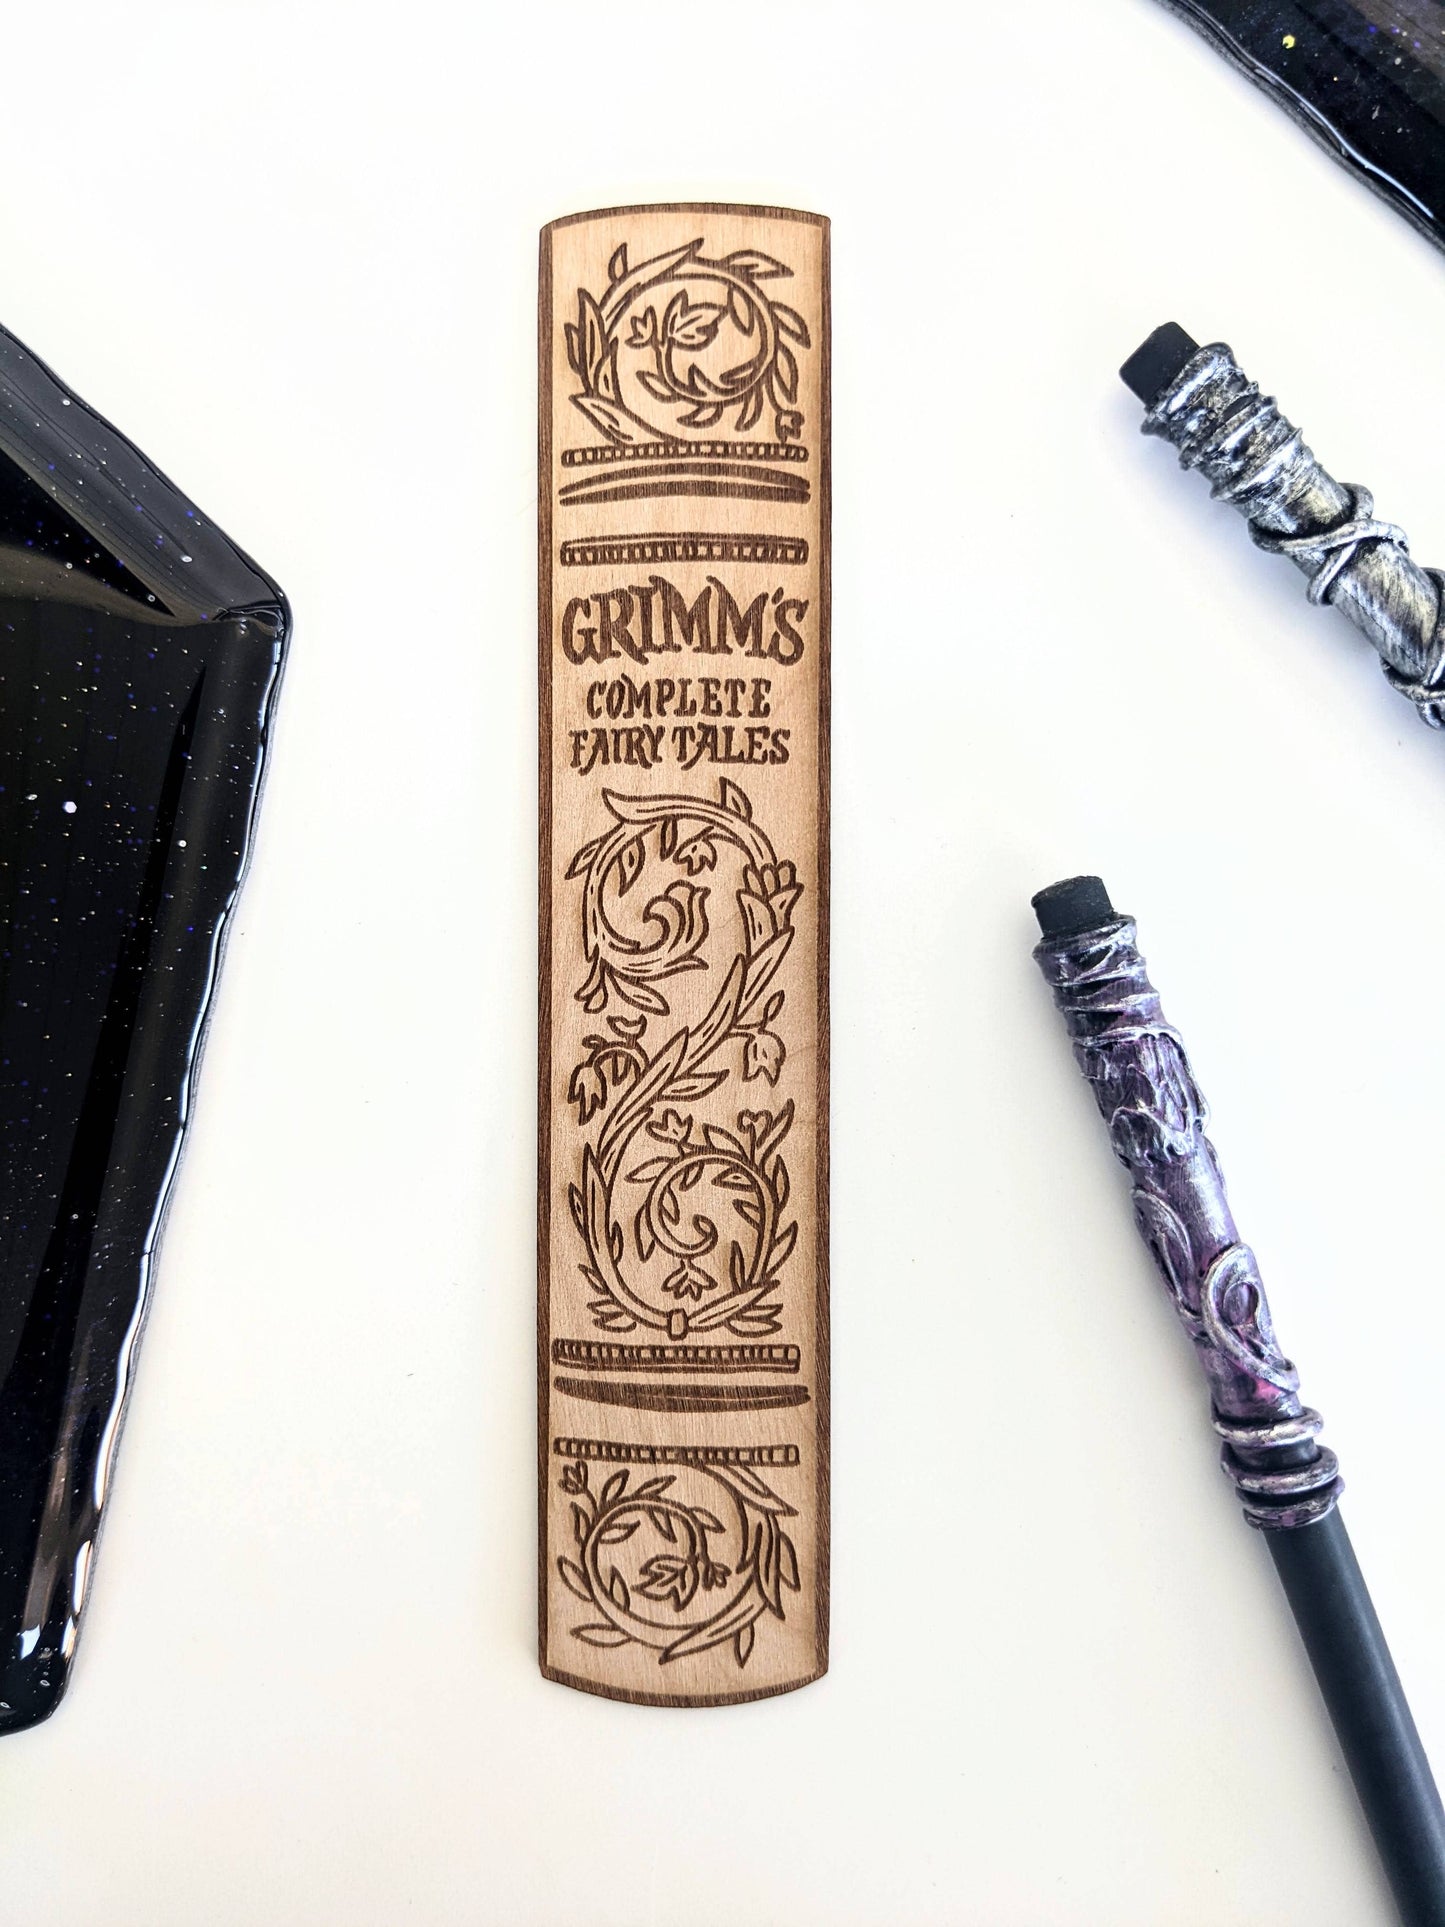 Grimms Fairytales Wooden Bookmark